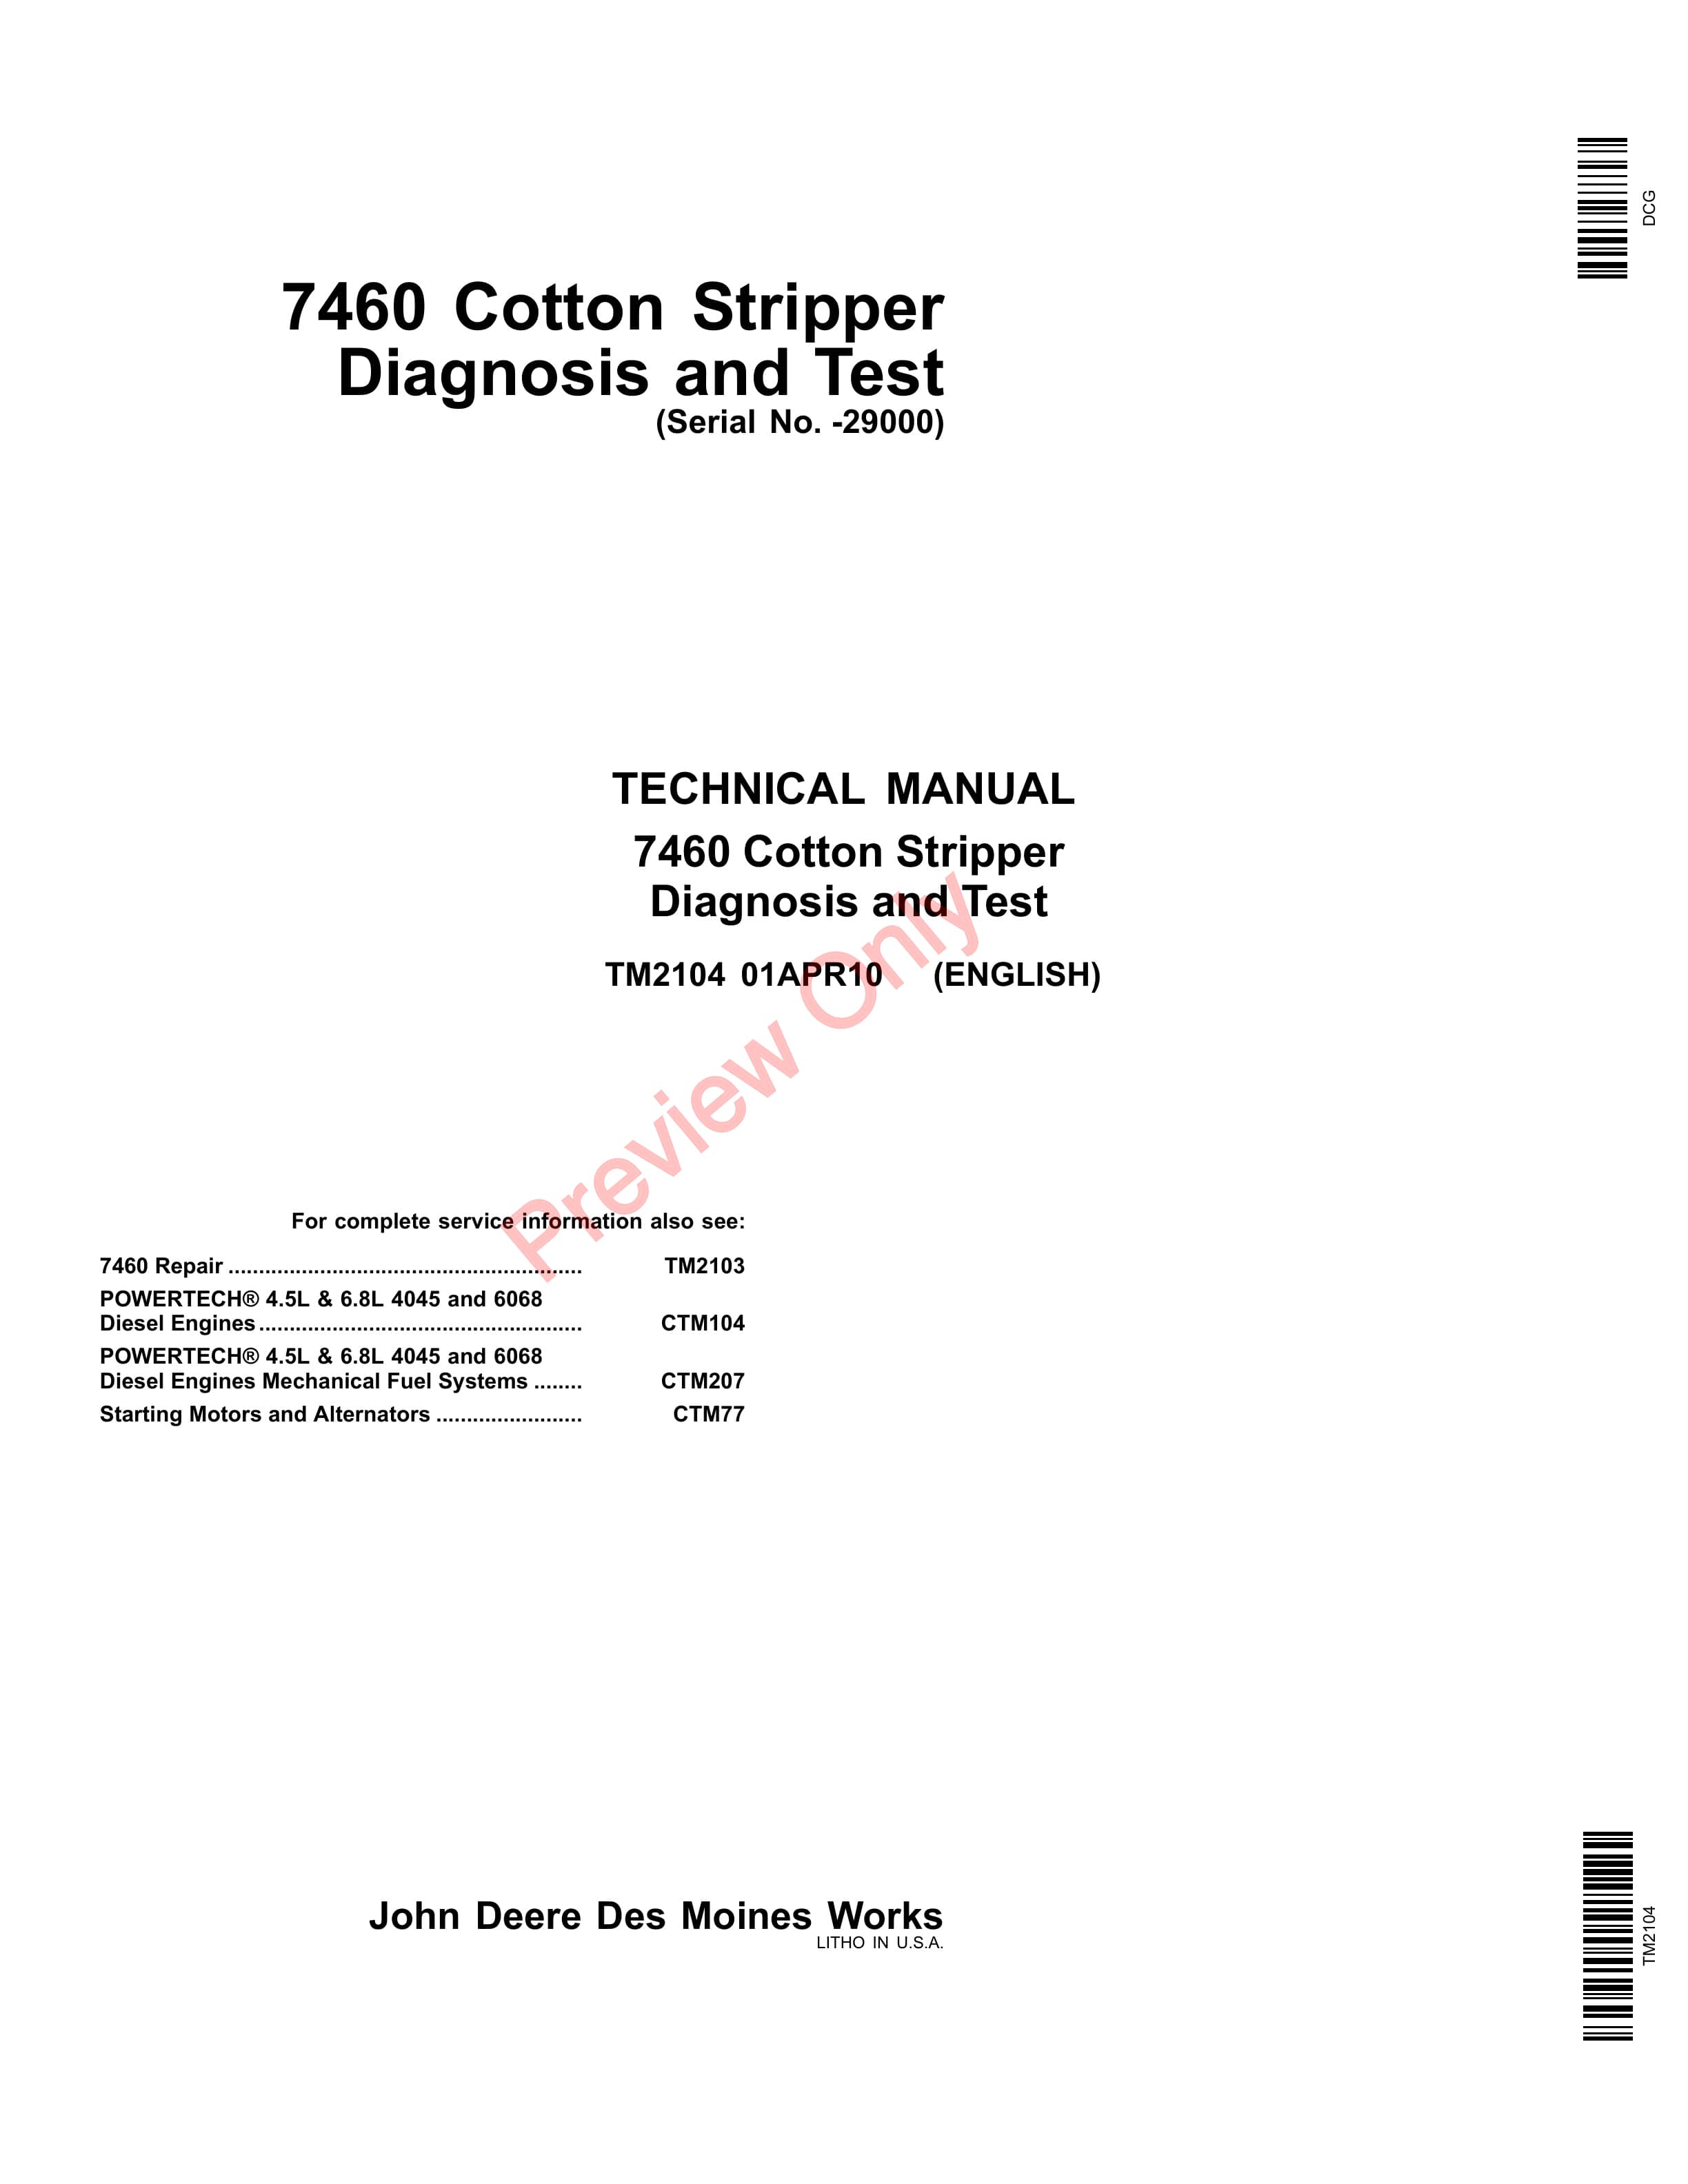 John Deere 7460 Cotton Stripper (000000-027000) Technical Manual TM2104 01APR10-1